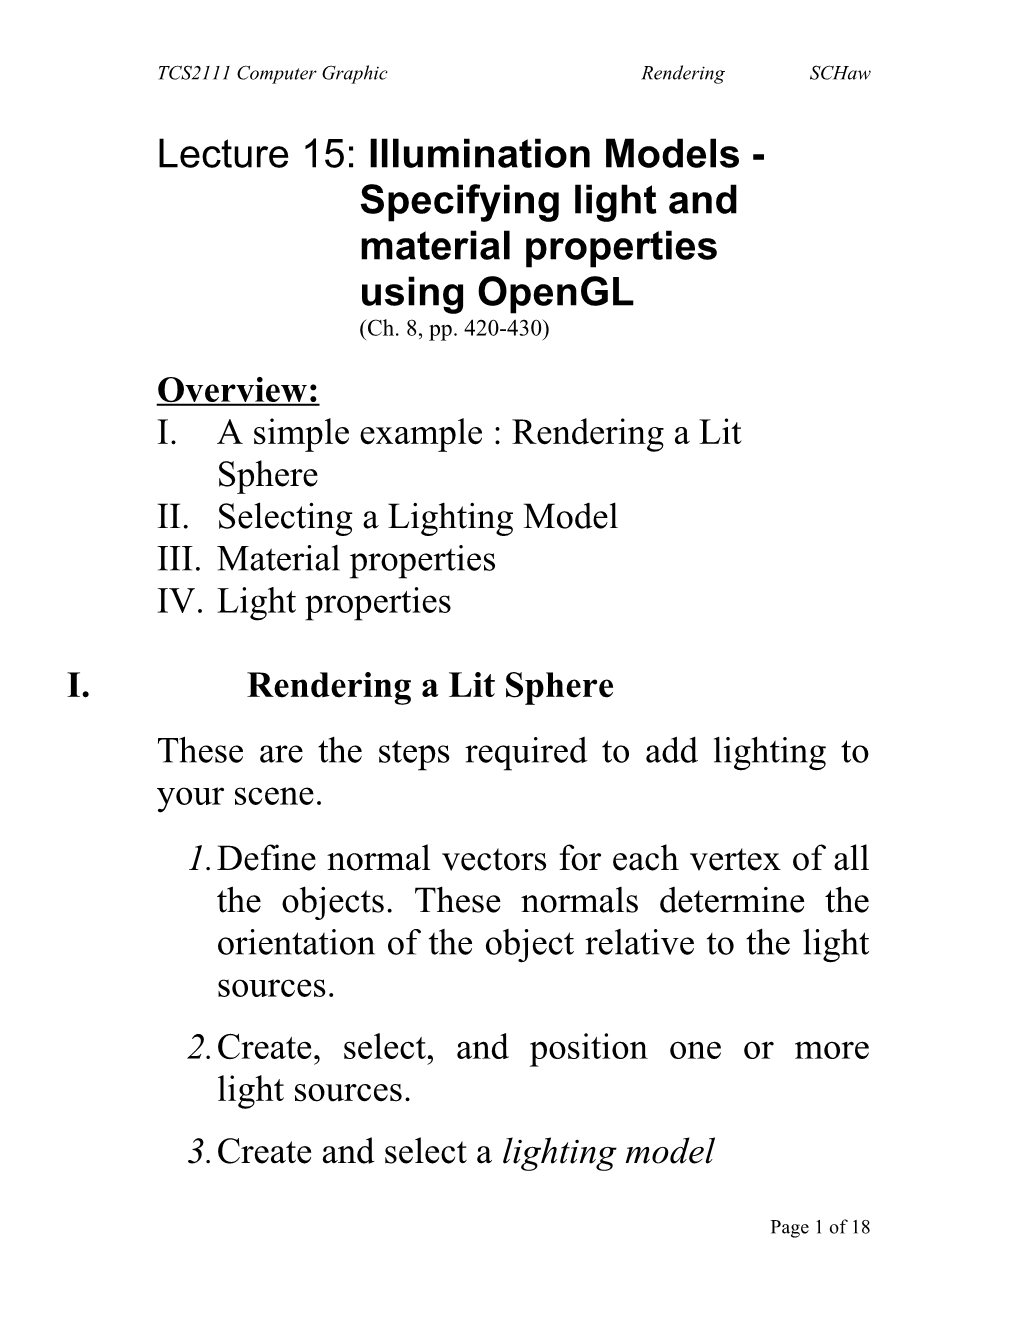 Lecture 15: Illumination Models